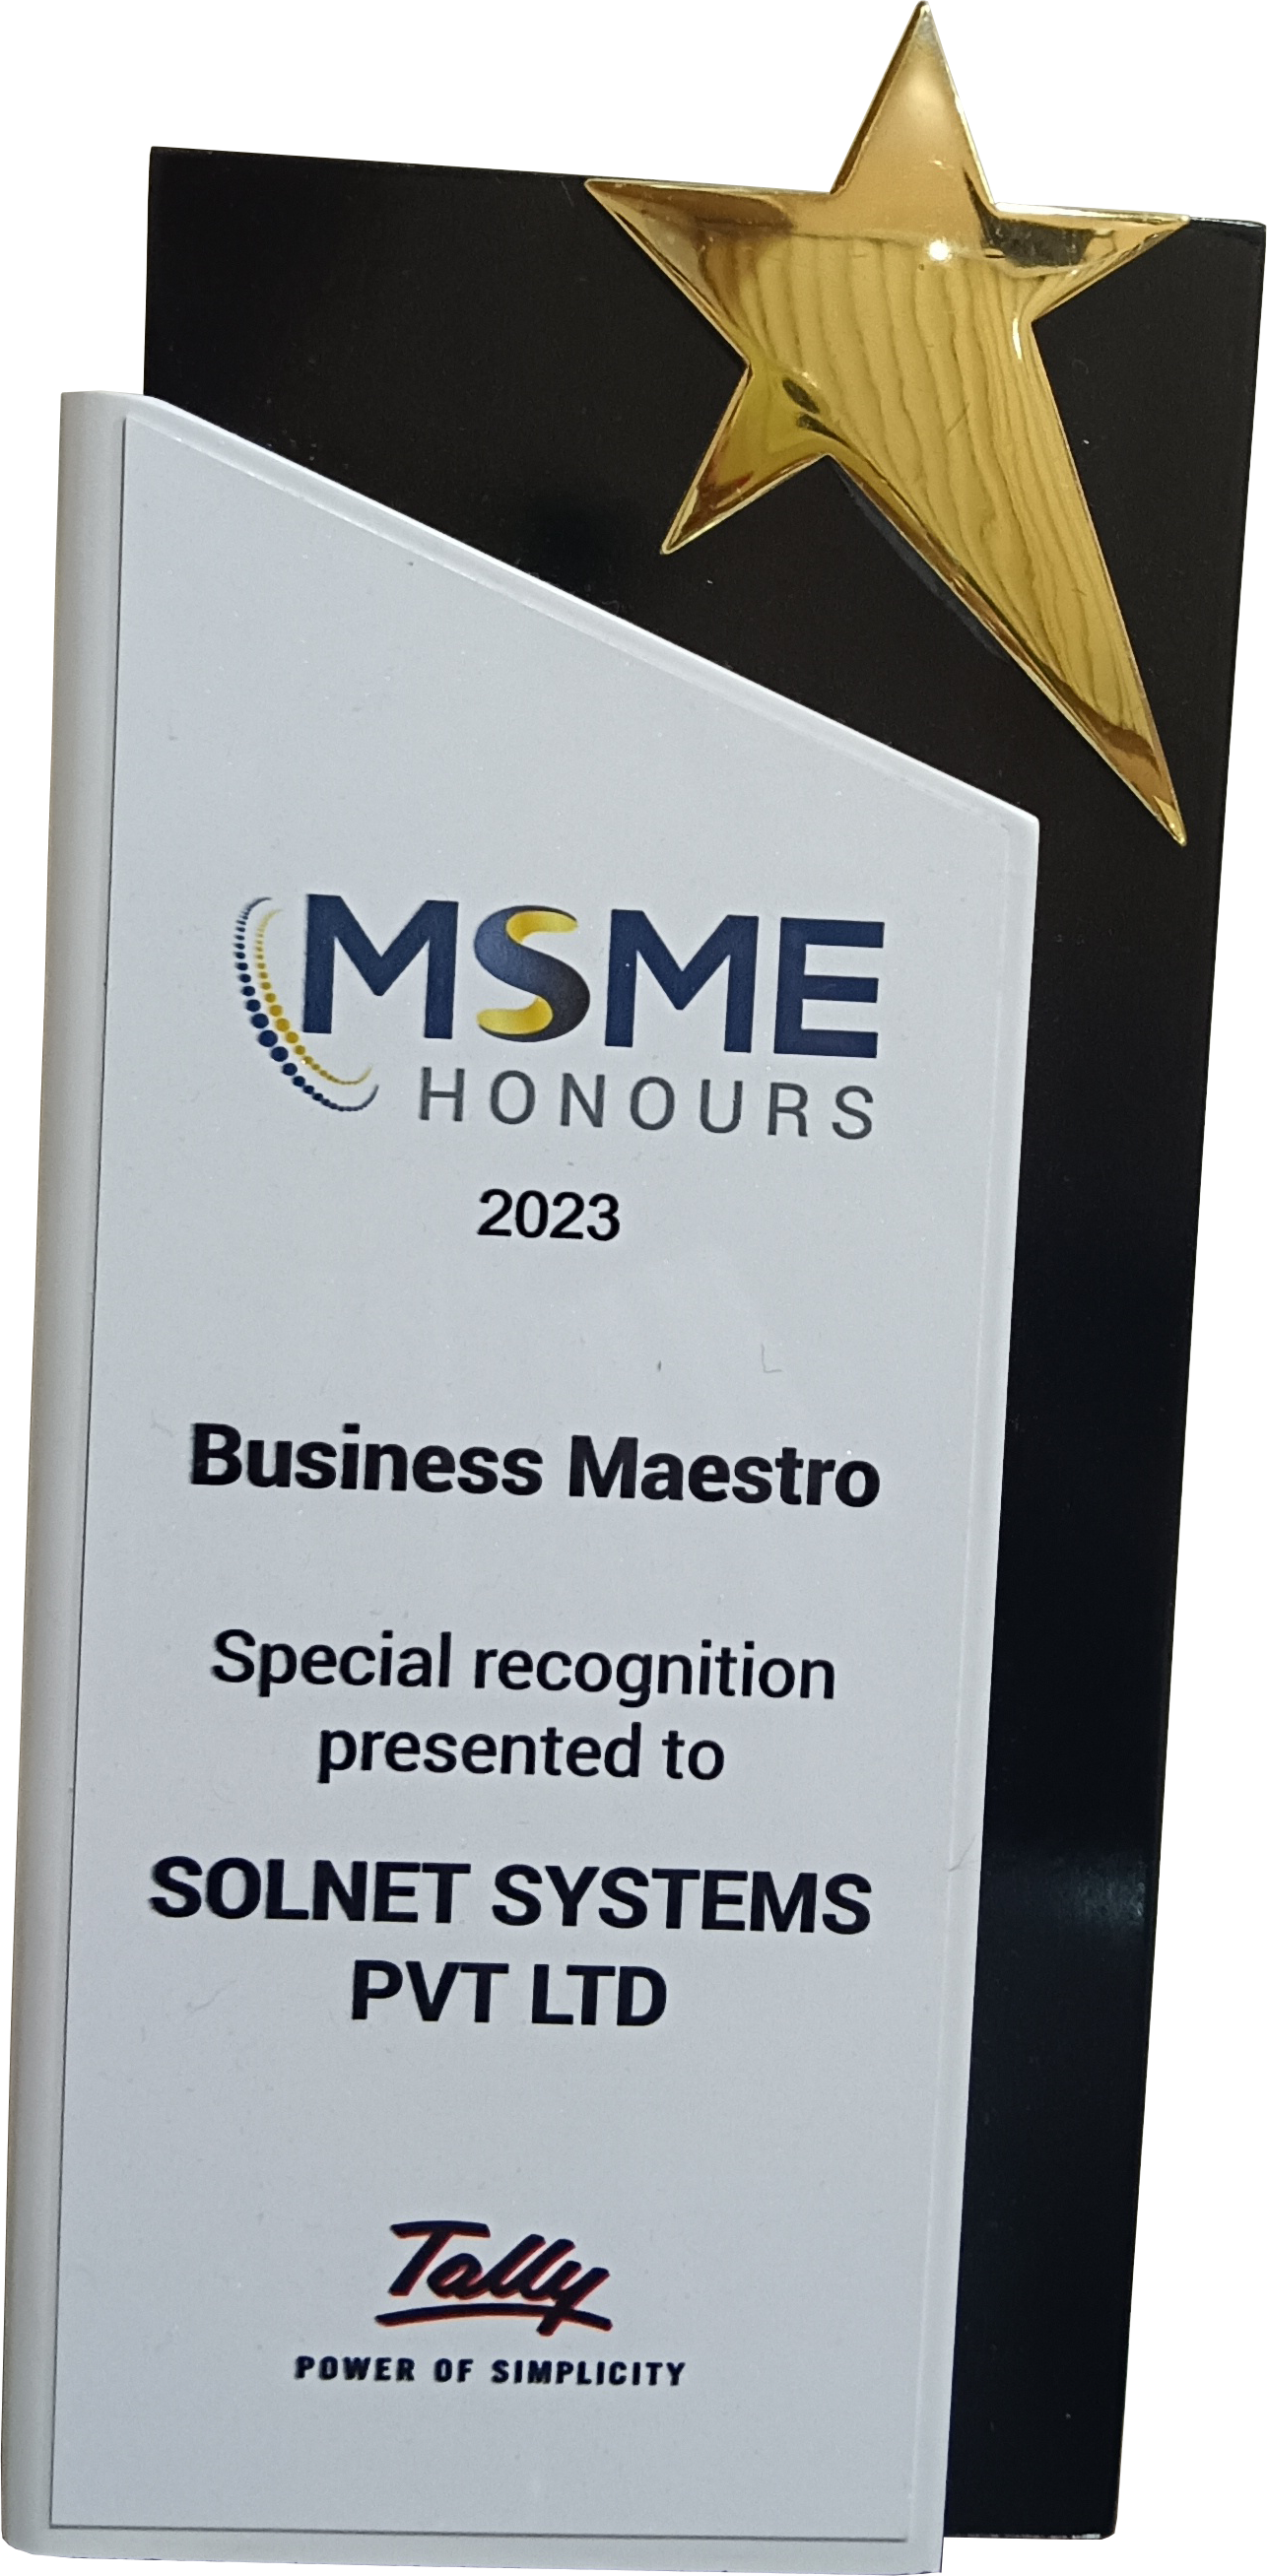 MSME Honours Tally Award 2023